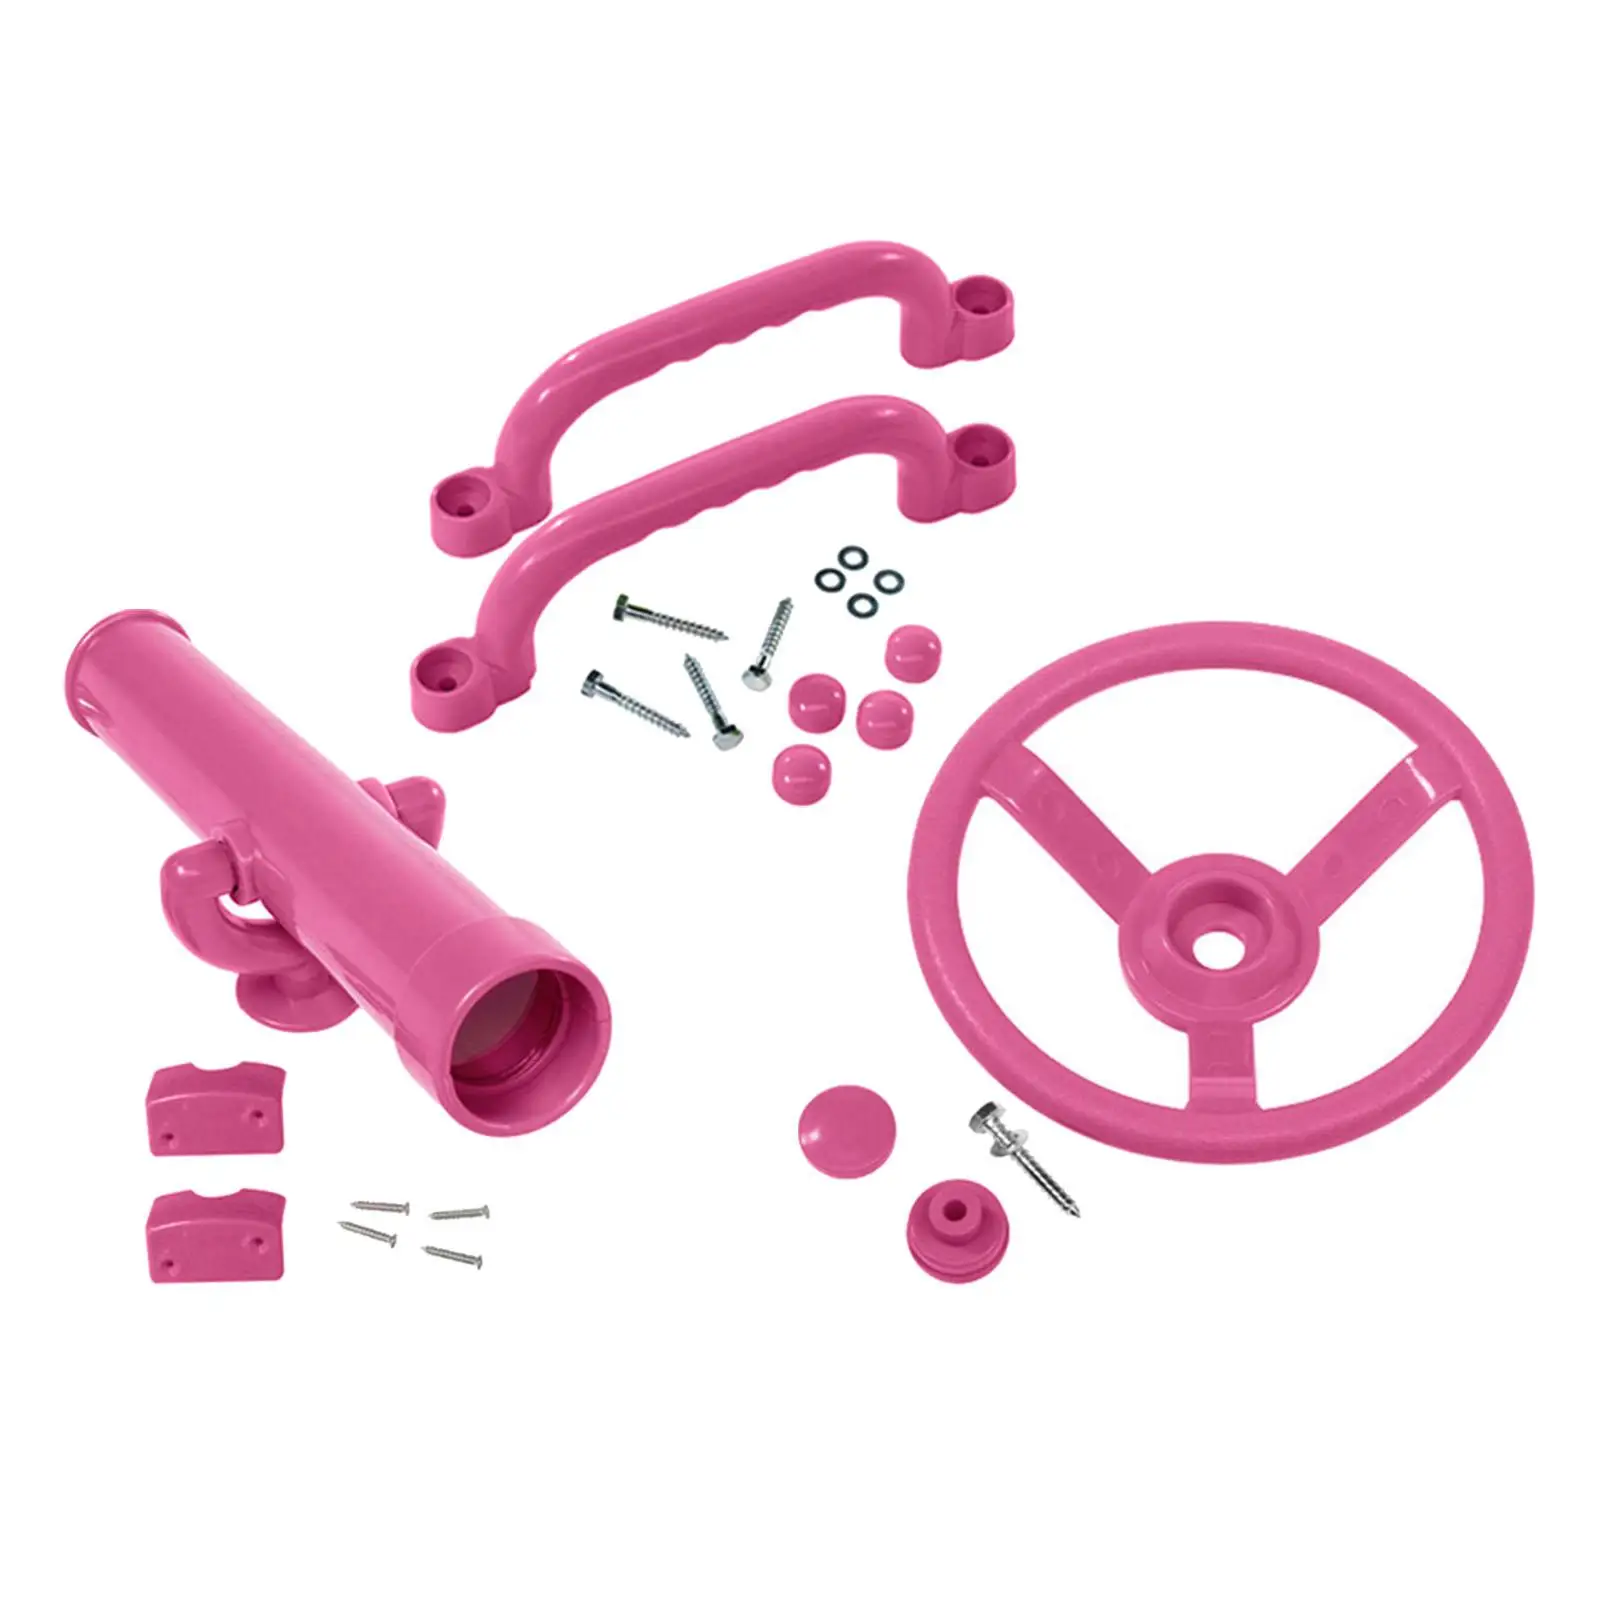 Playground Equipment Pink Set Pirate Telescope Steering Wheel Handle Bars for Jungle Gym Swingset Backyard Treehouse Parts